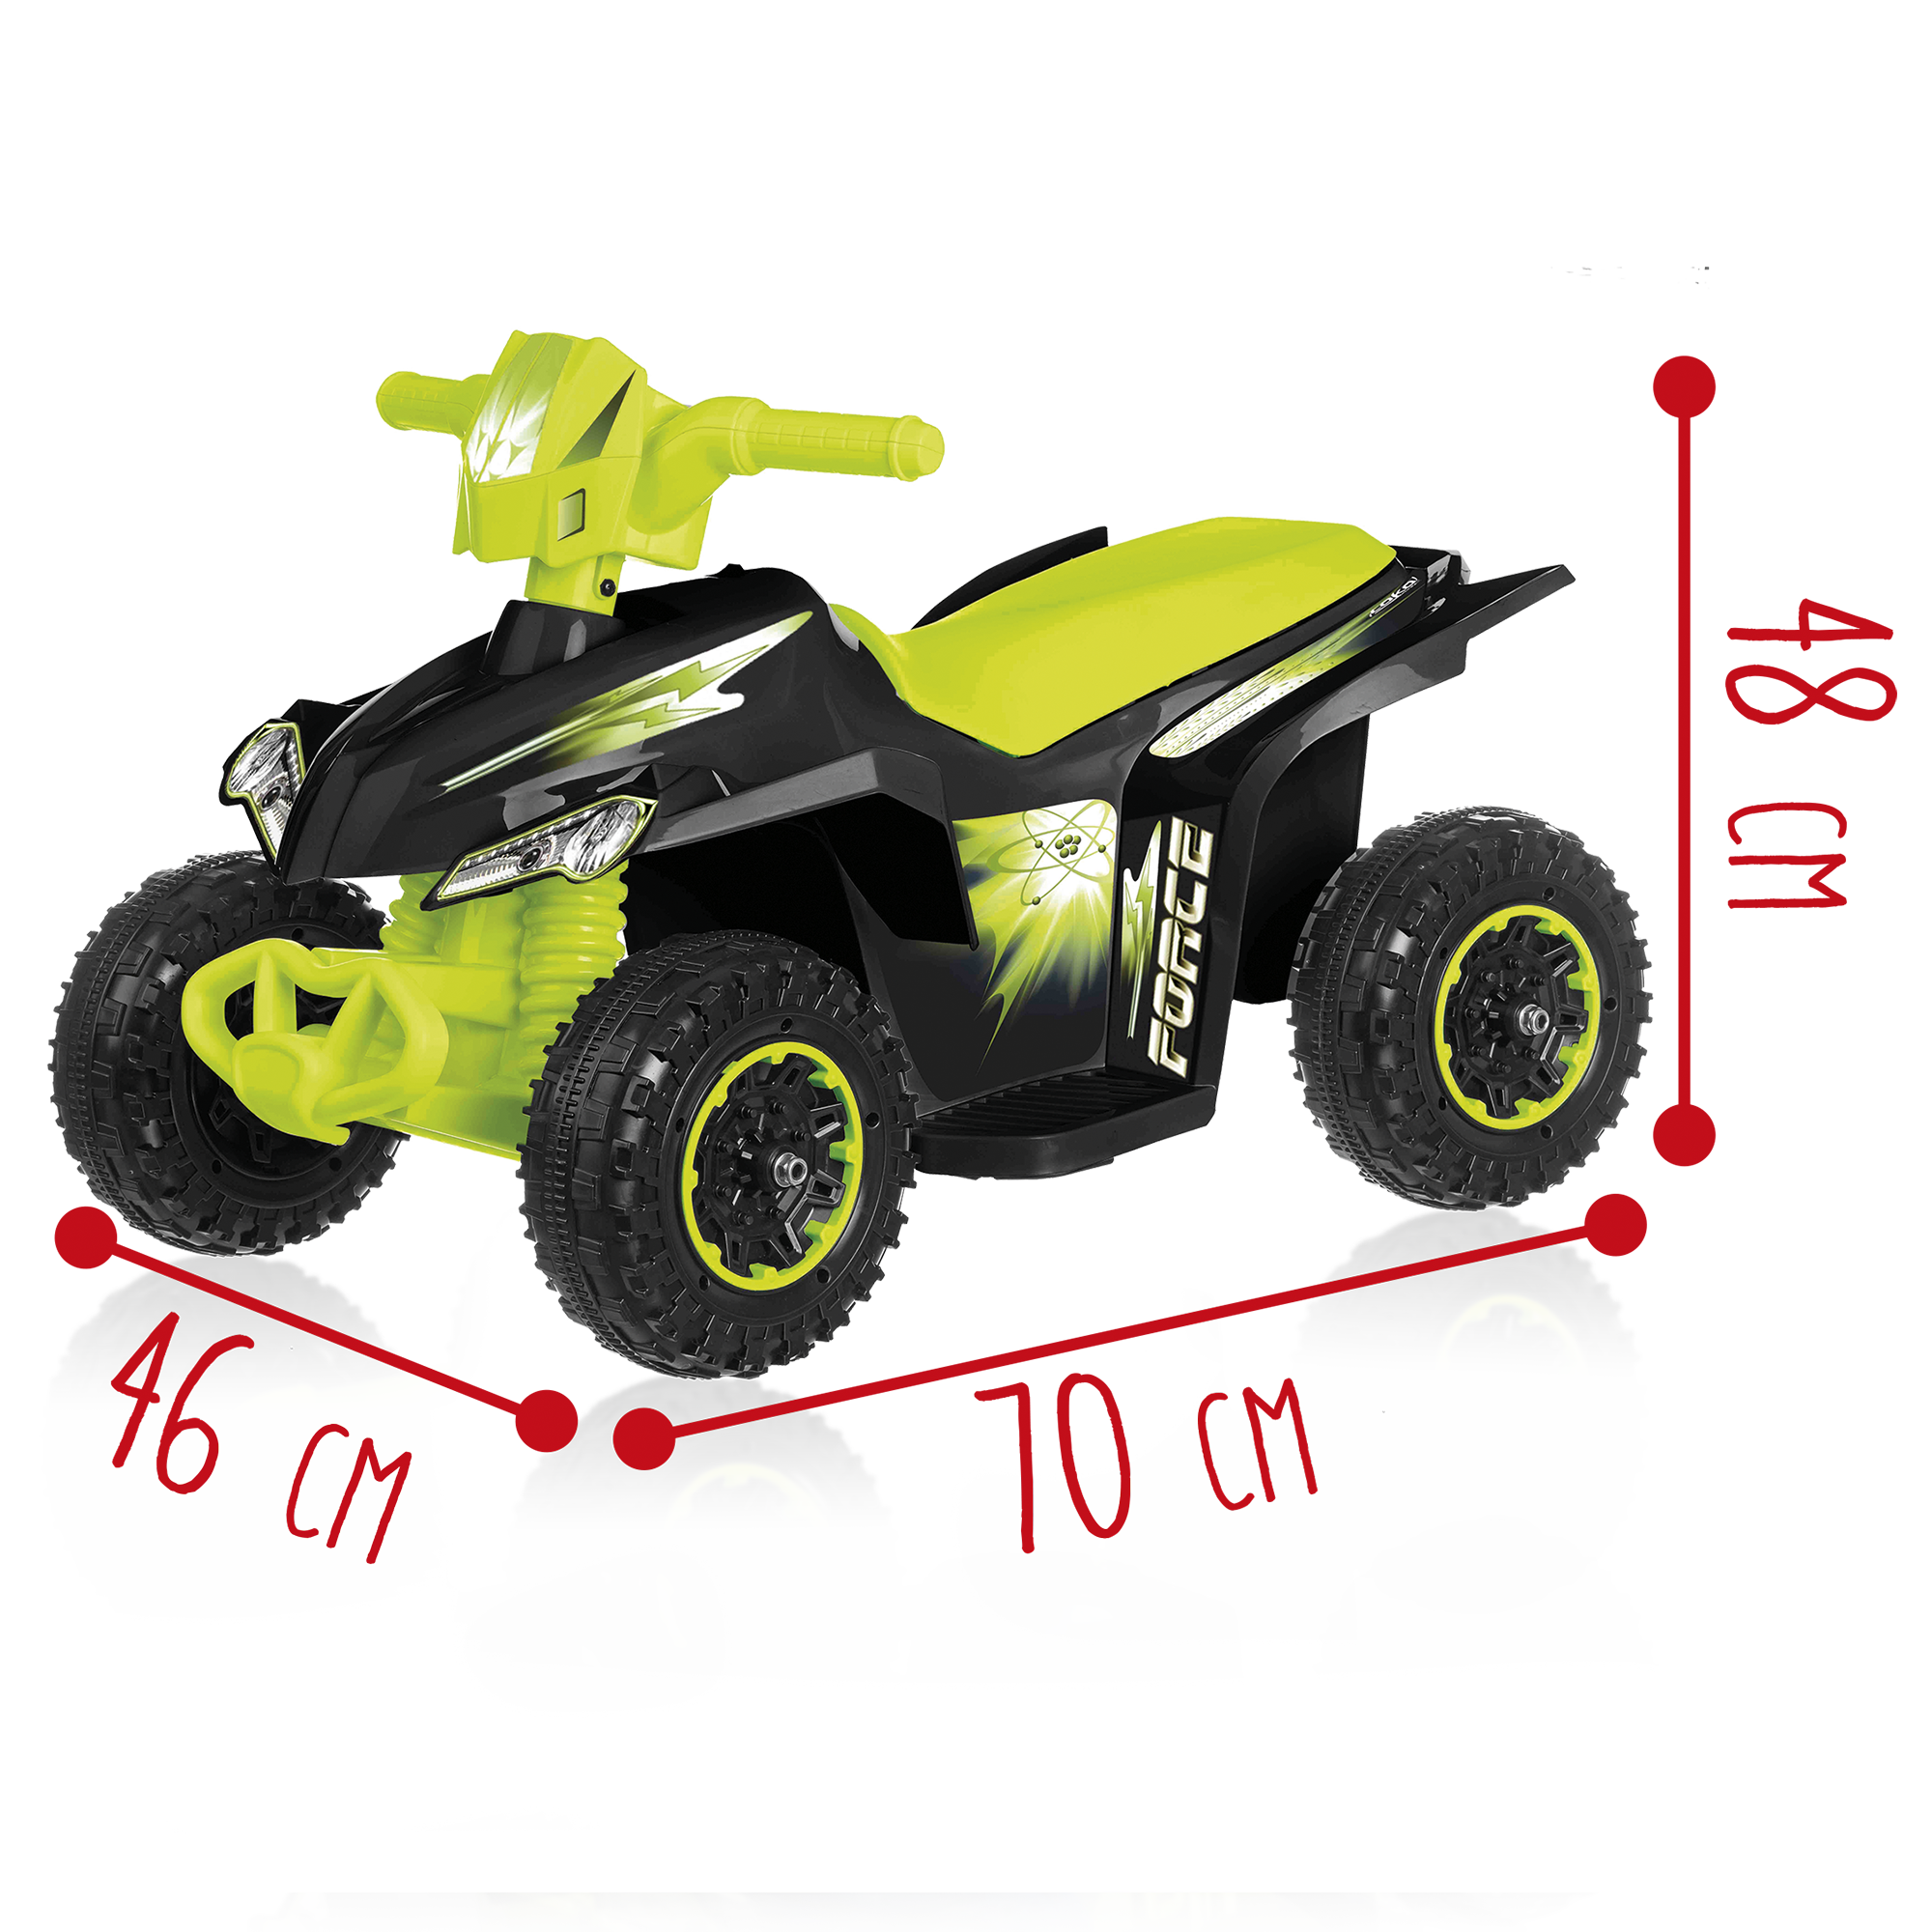 Sun & Sport Παιδική Ηλεκτροκίνητη Quad Γουρούνα ATV 6V Πράσινη RDF51171 - Sun & Sport